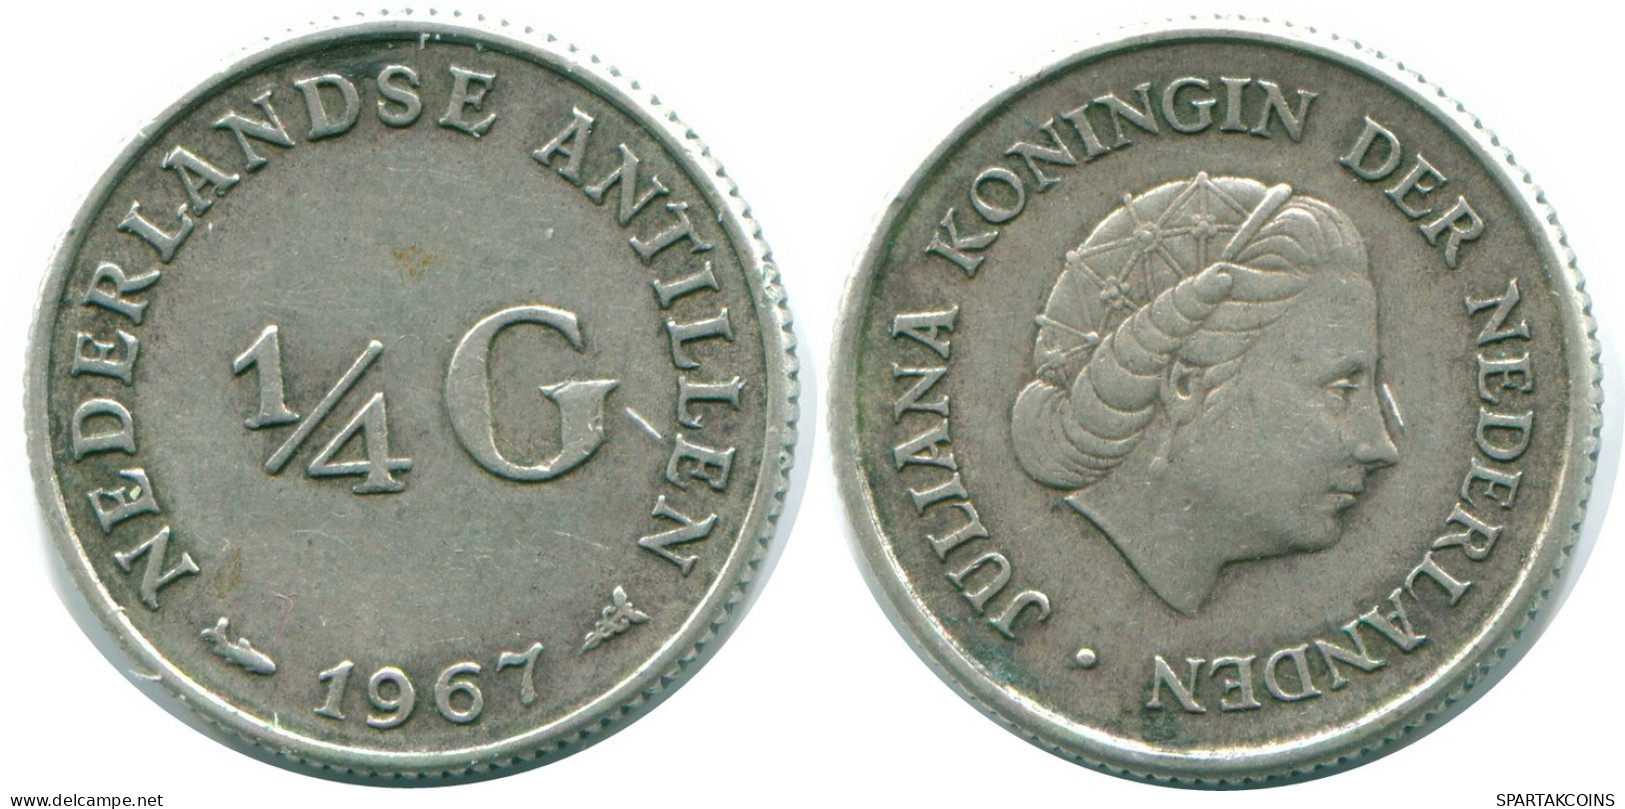 1/4 GULDEN 1967 NIEDERLÄNDISCHE ANTILLEN SILBER Koloniale Münze #NL11590.4.D.A - Netherlands Antilles